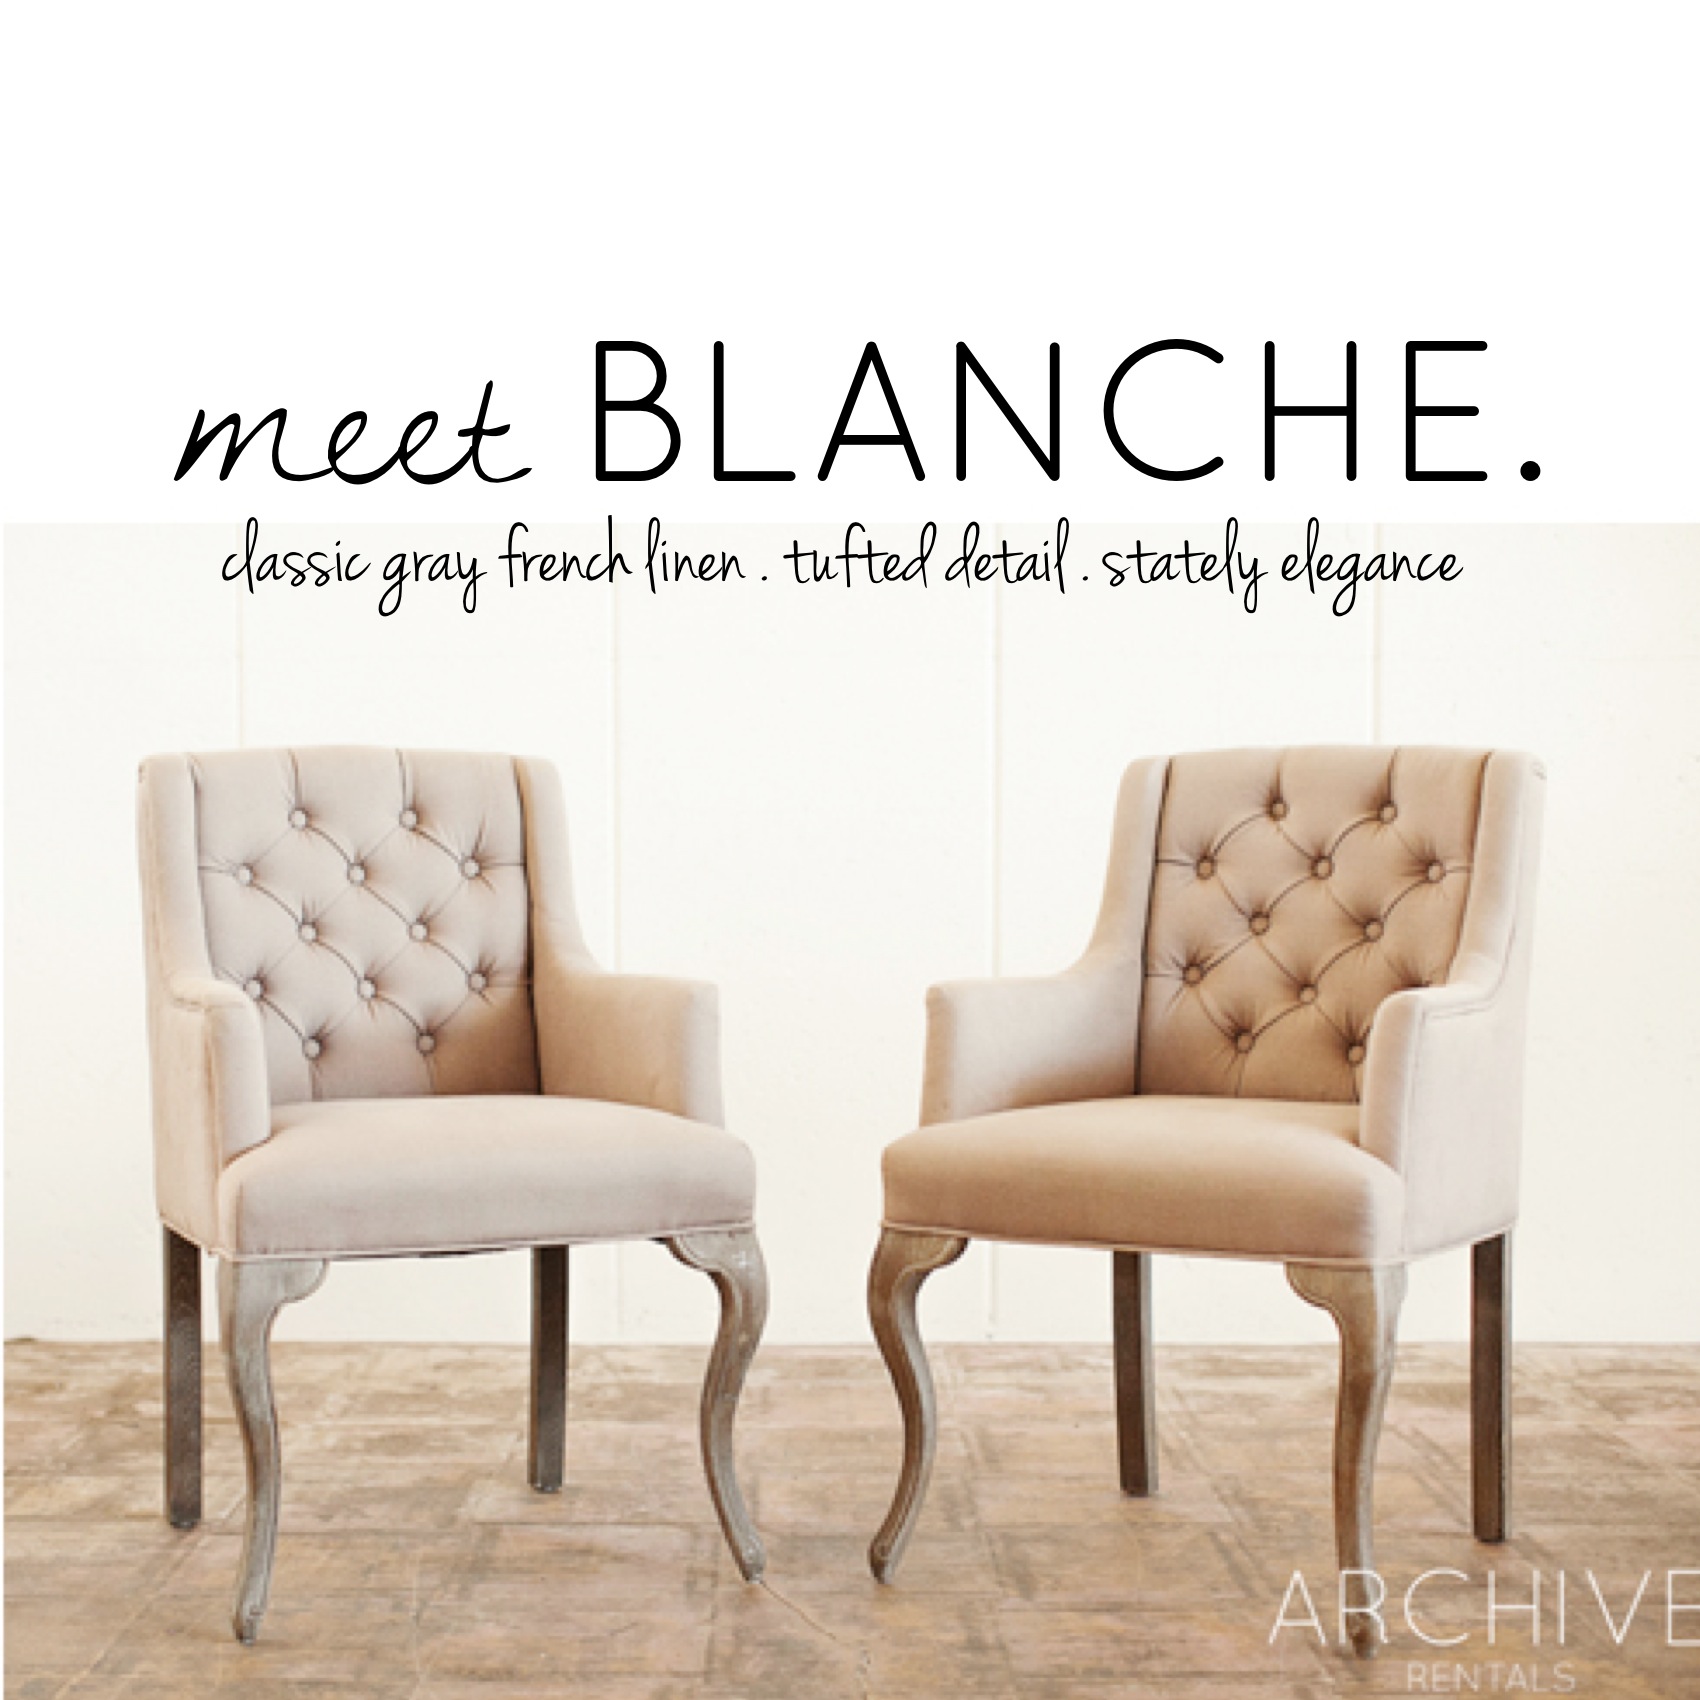 Archive Vintage Rentals Vintage Blanche Chair